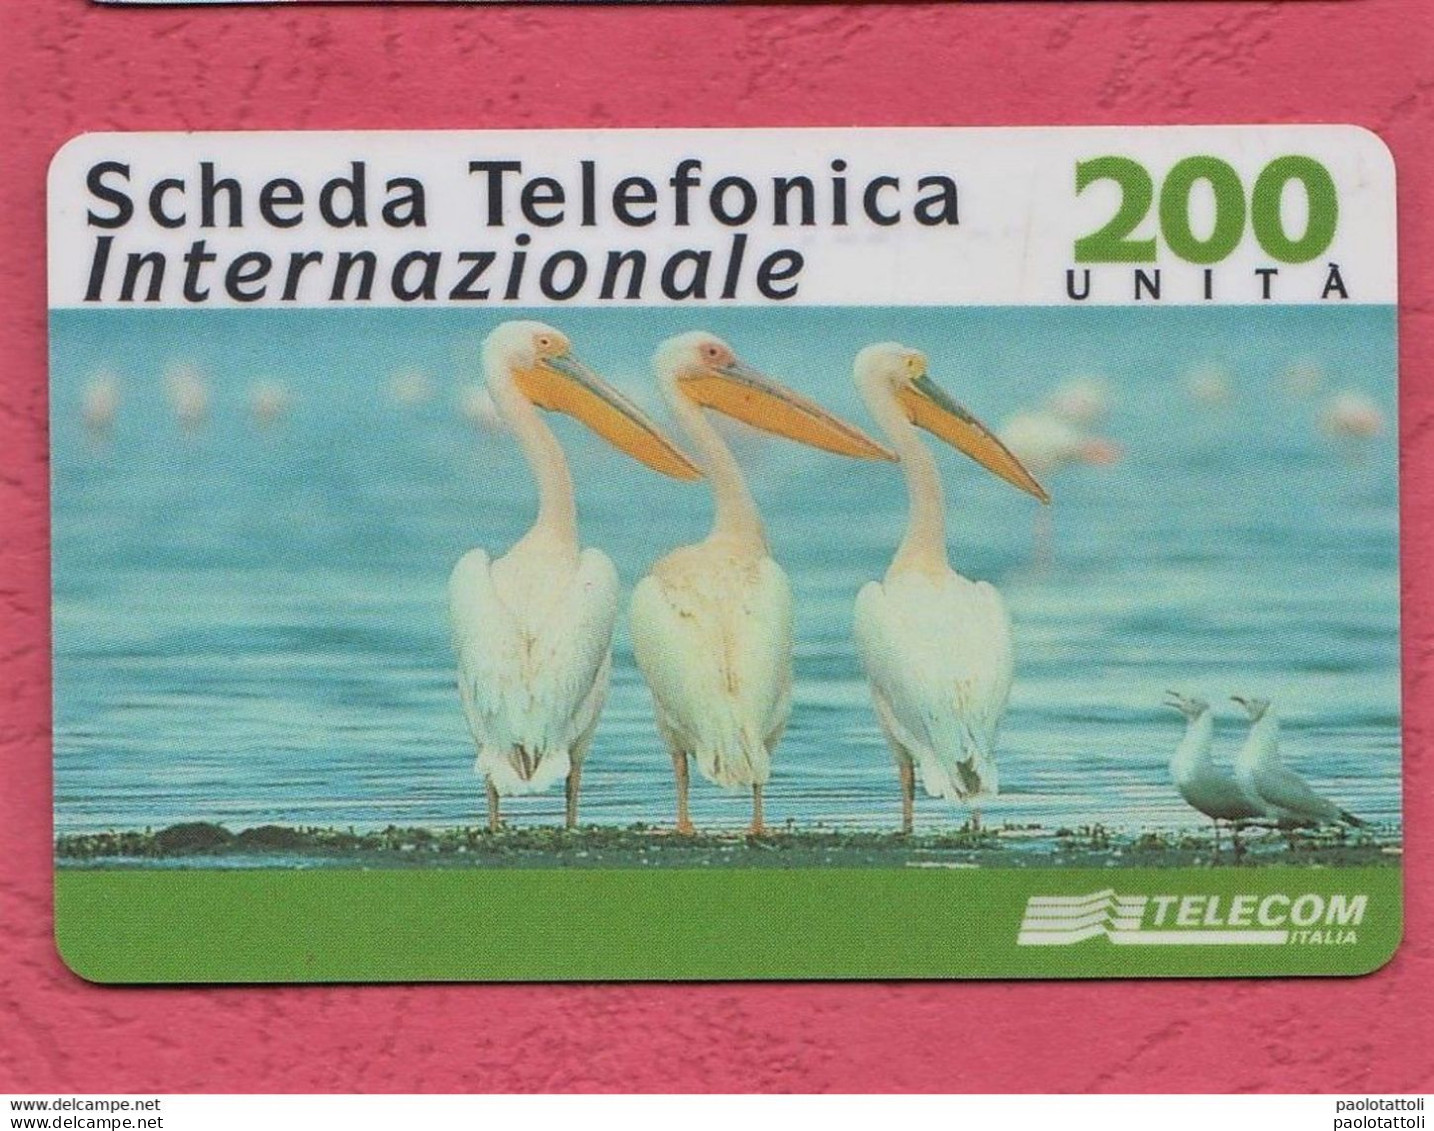 Italy-30-9-2001. Telecom, Scheda Telefonica Internazionale- International Phone Card- Used- 200 Units - [2] Sim Cards, Prepaid & Refills